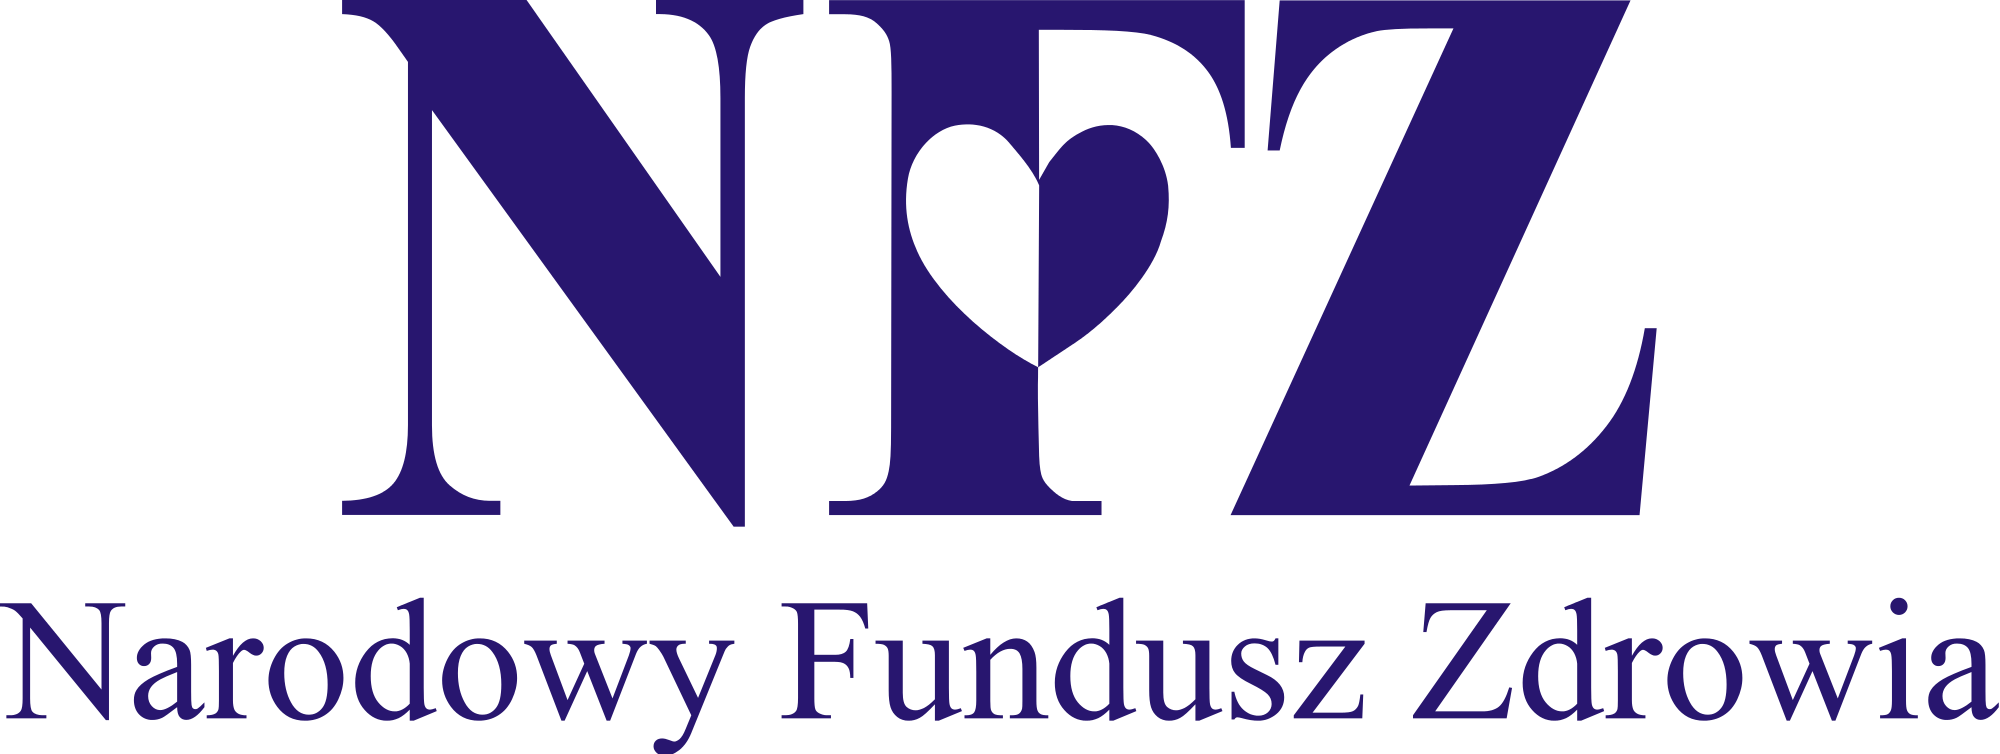 2000px-NFZ_logo.svg.png